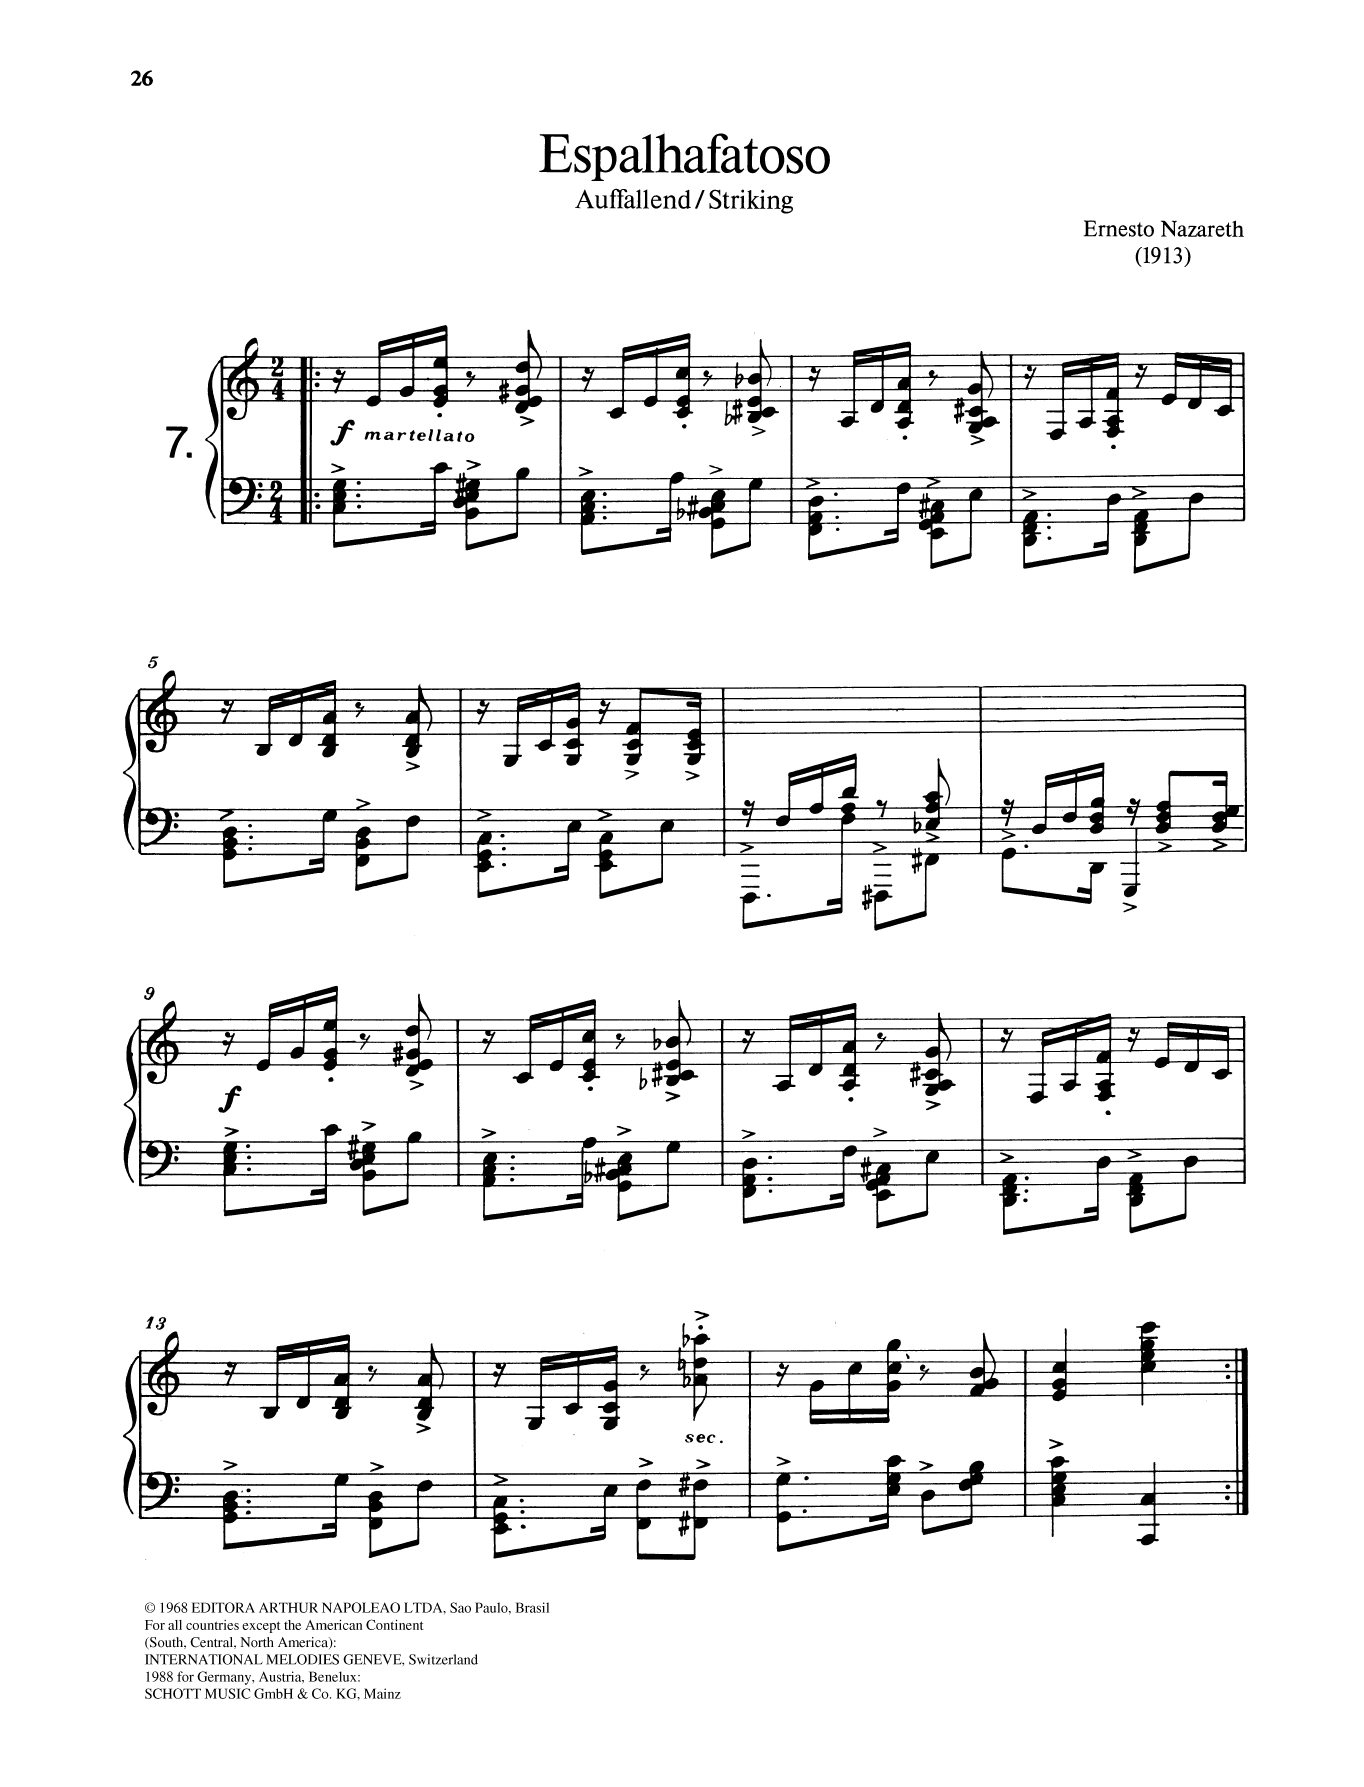 Ernesto Nazareth Espalhafatoso Sheet Music Notes & Chords for Piano Solo - Download or Print PDF